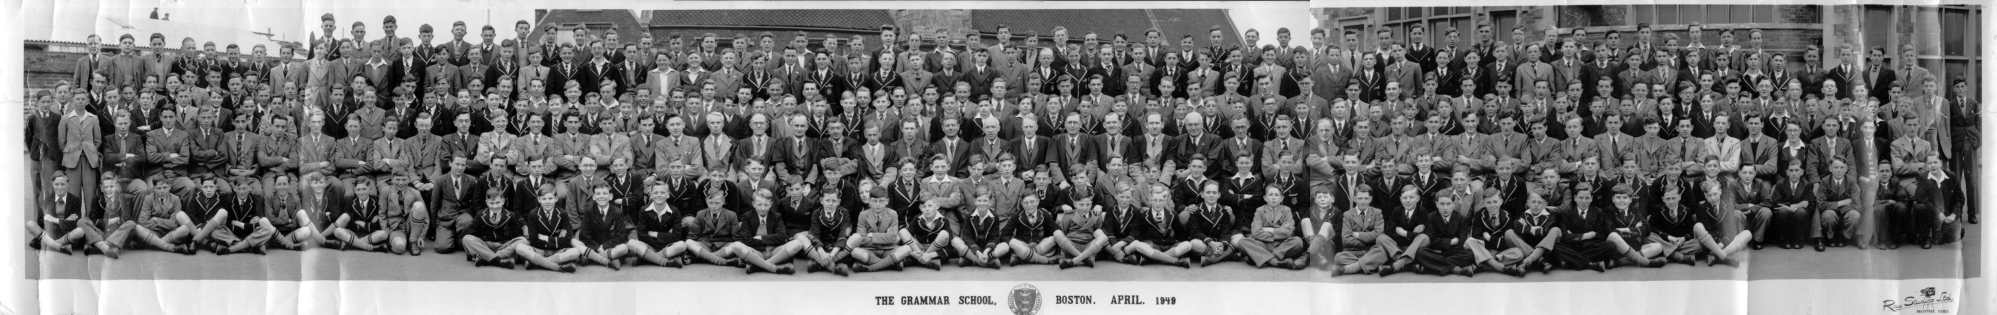 Boston Grammar School - whole school, panoramic photograph (1949)